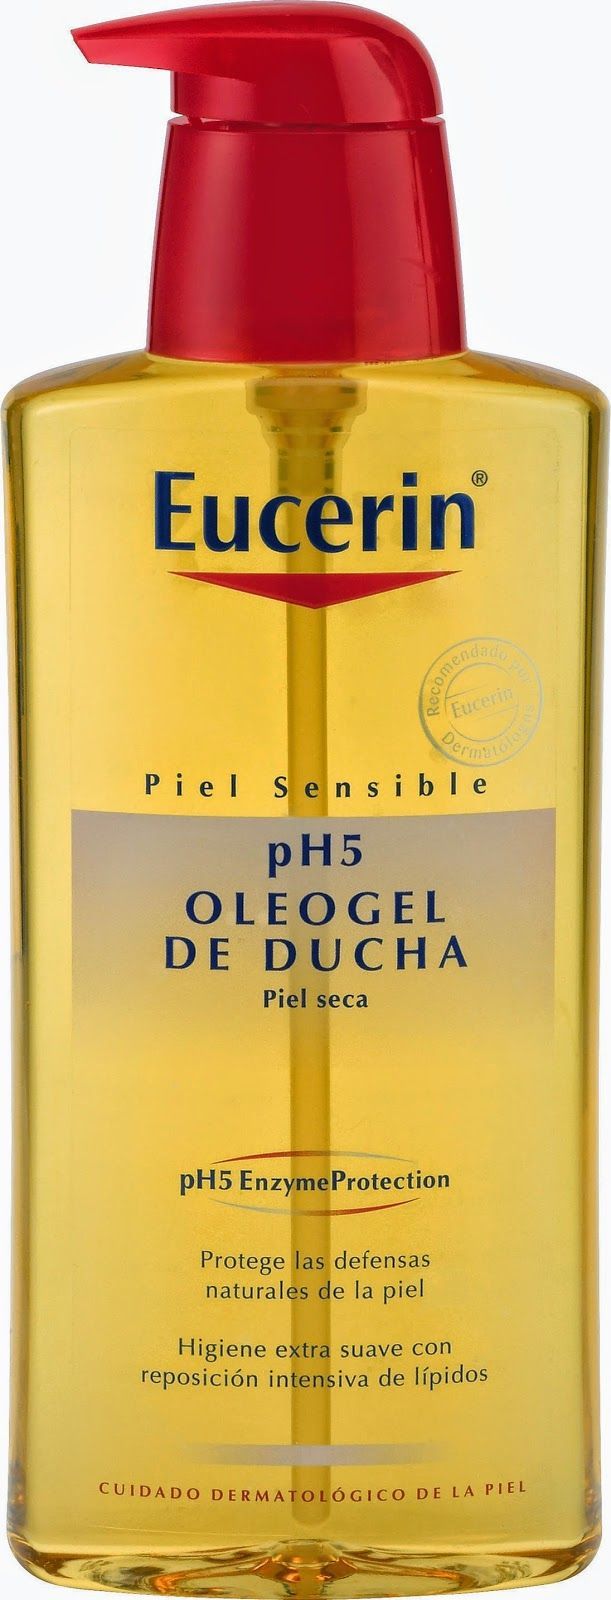 oleo gel ph5, Eucerin, piel sensible